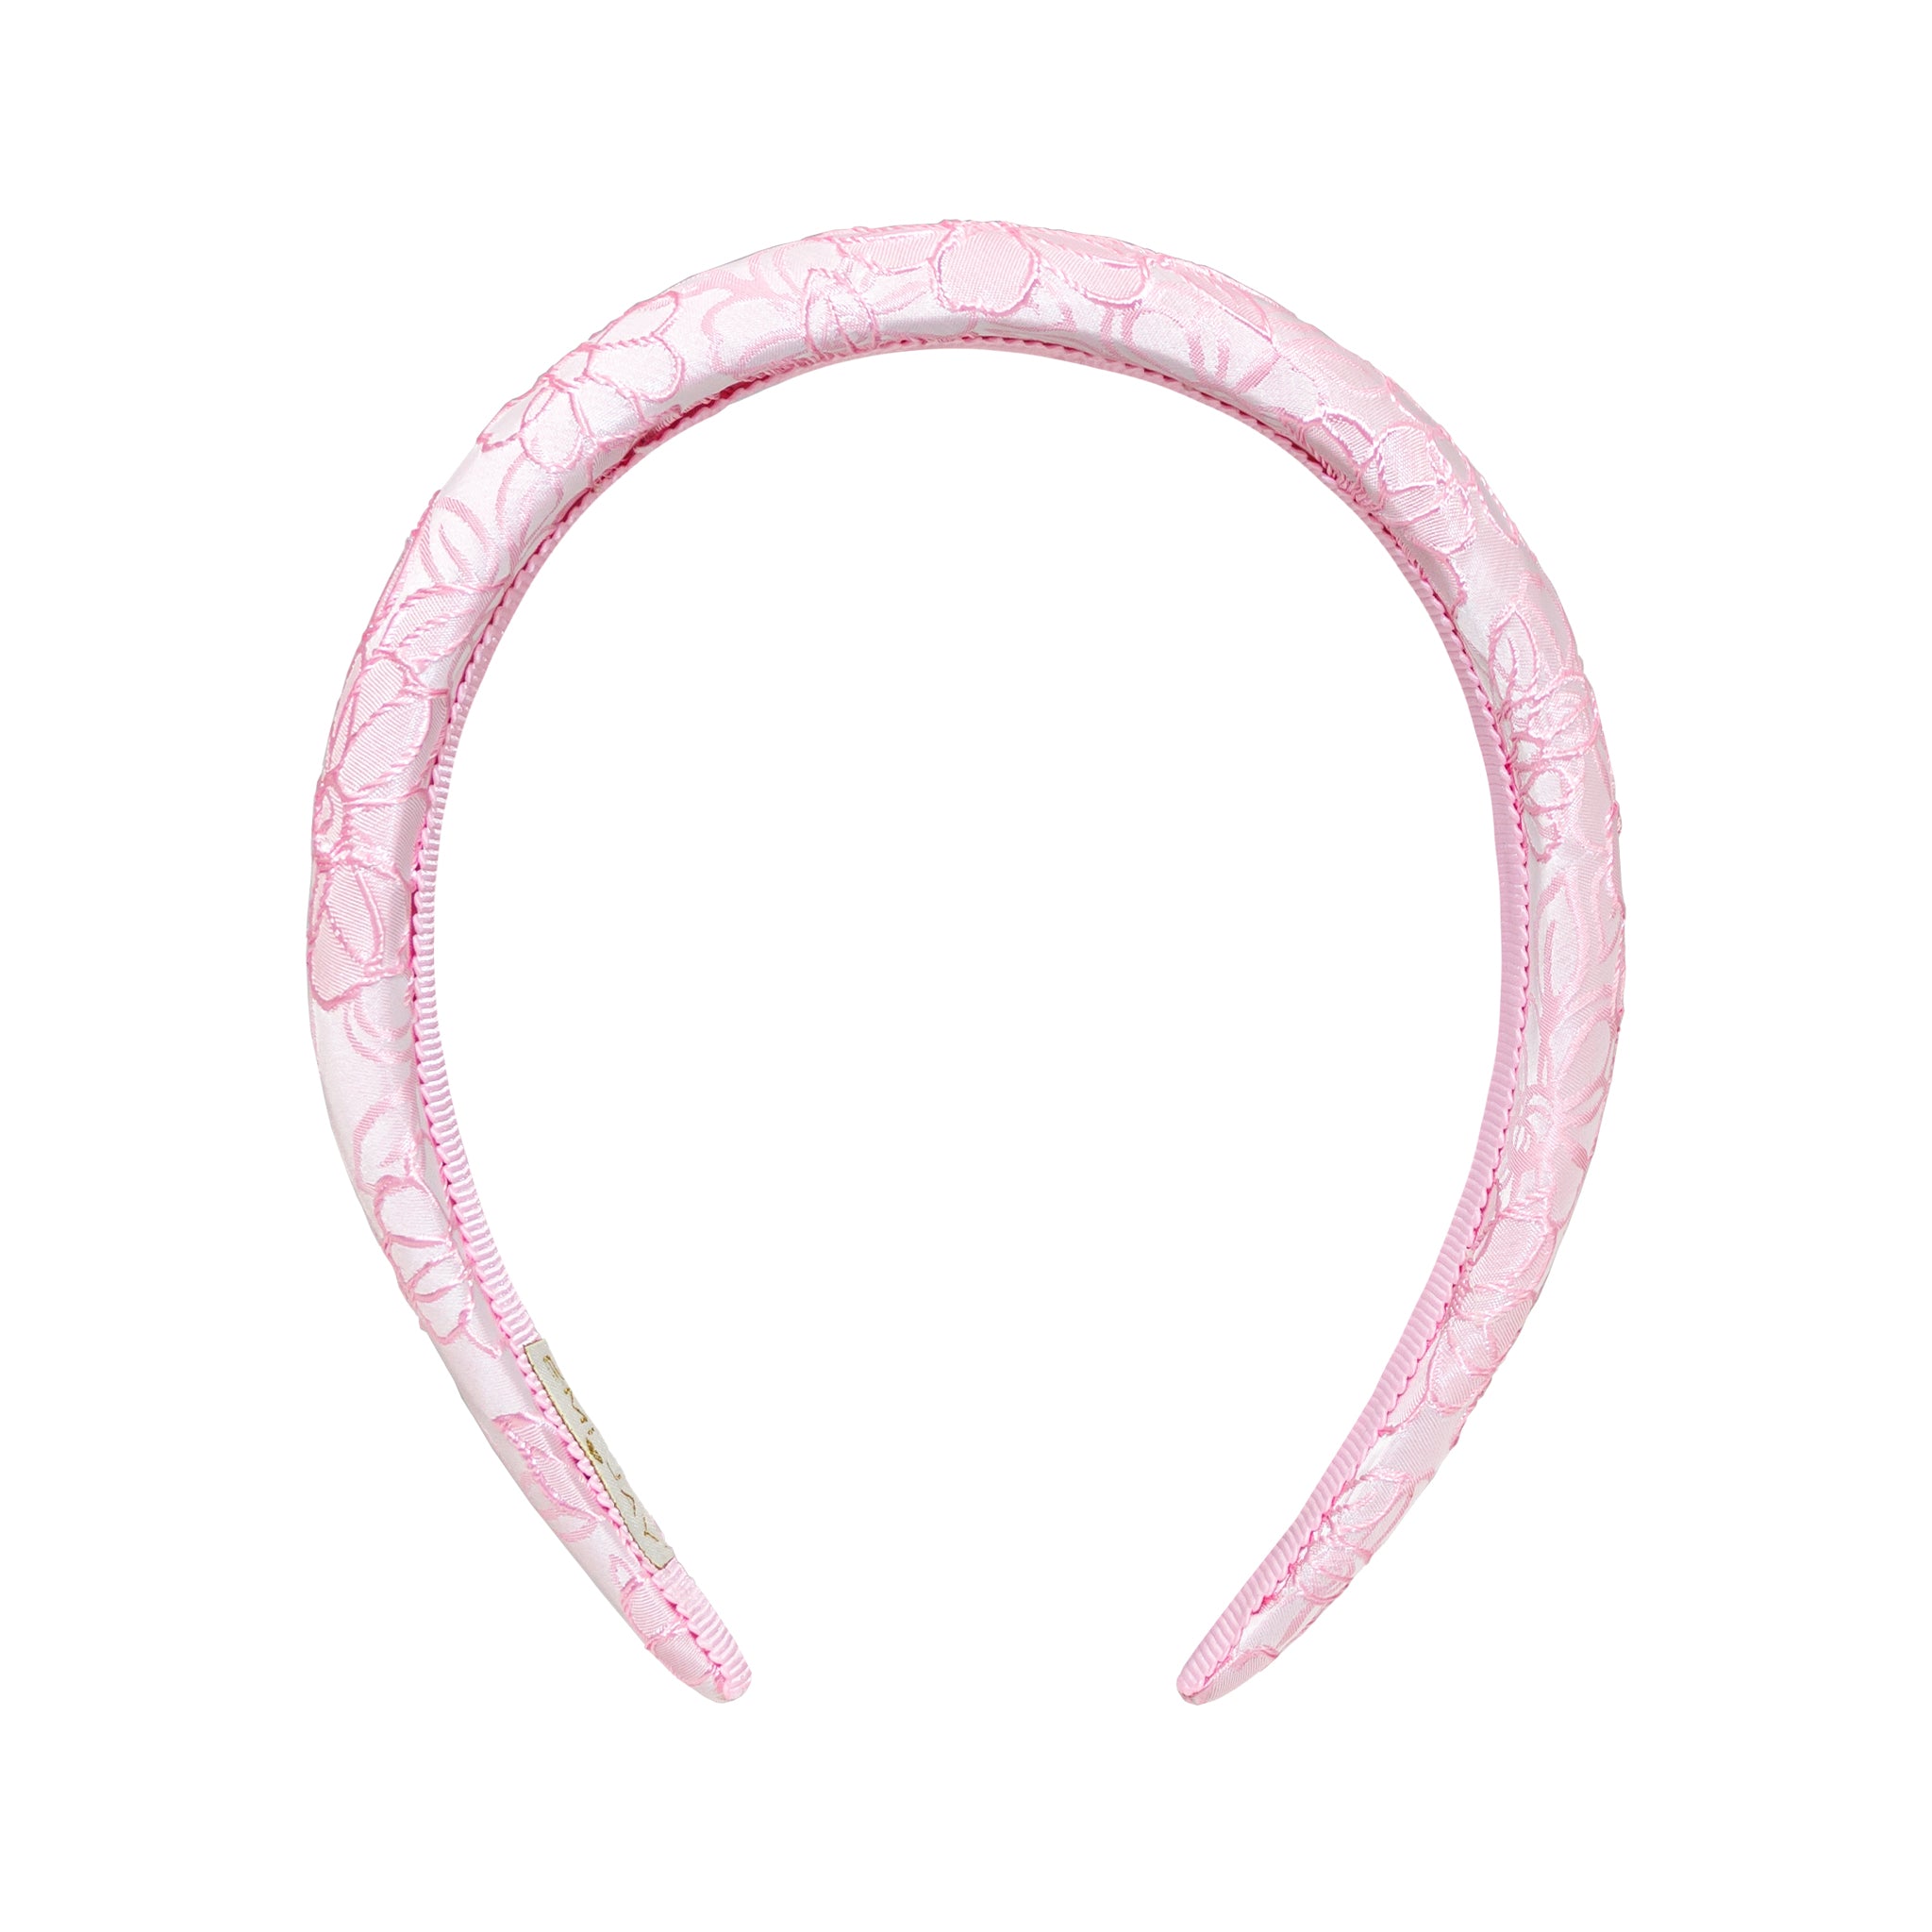 Halo Headband in Pink Embroidery & Emi Jay